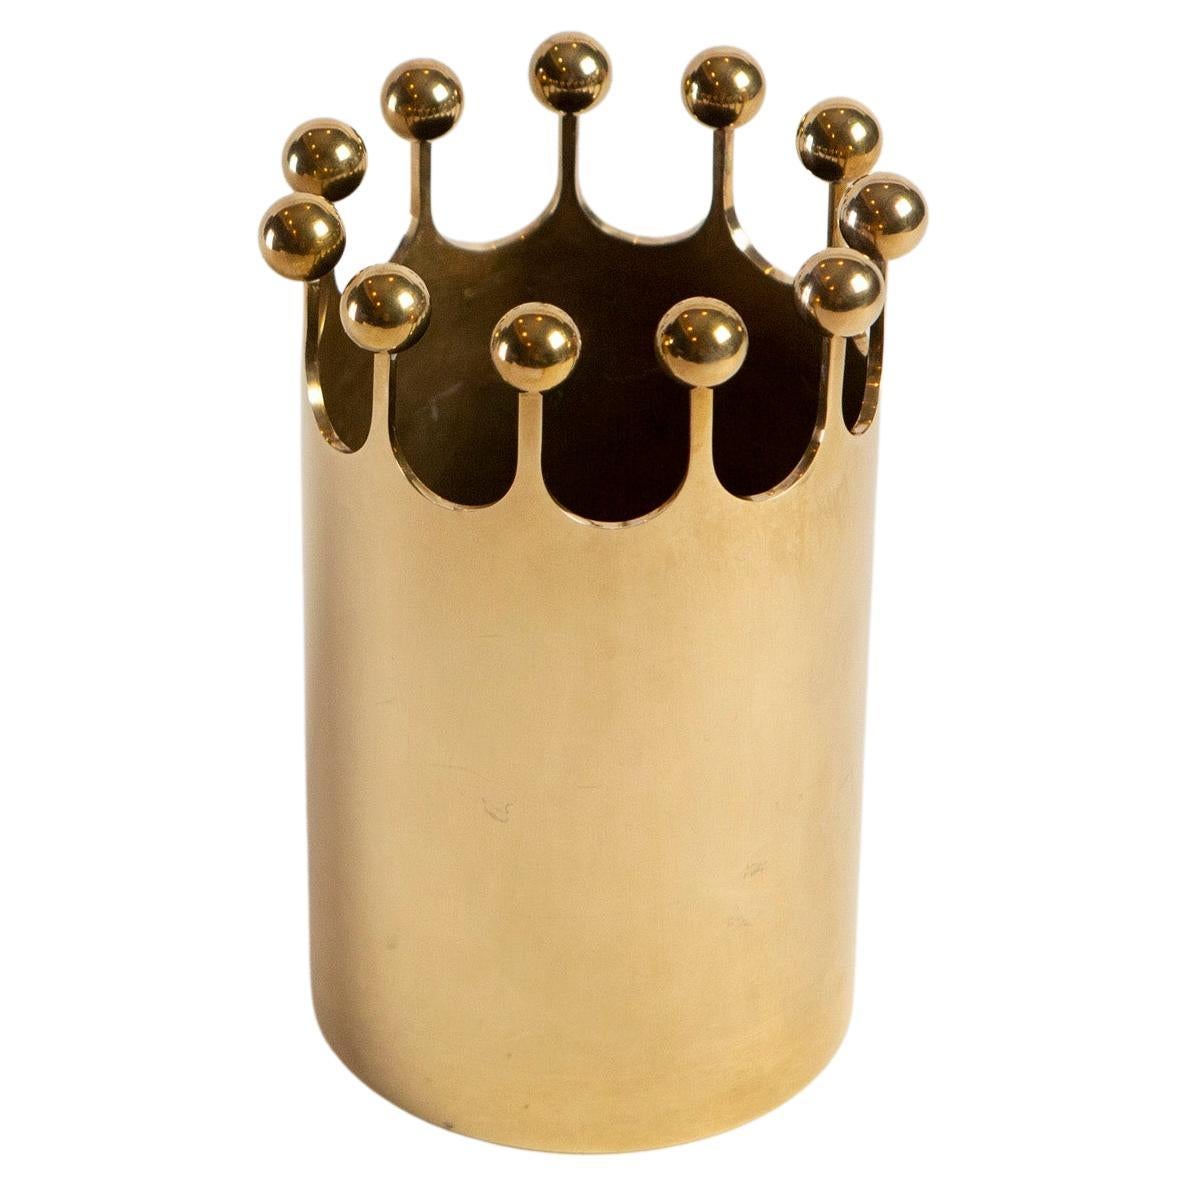 Pierre Forsell Solid Brass Vase, "11 Crown Points" for Skultuna, Sweden  1950s For Sale at 1stDibs